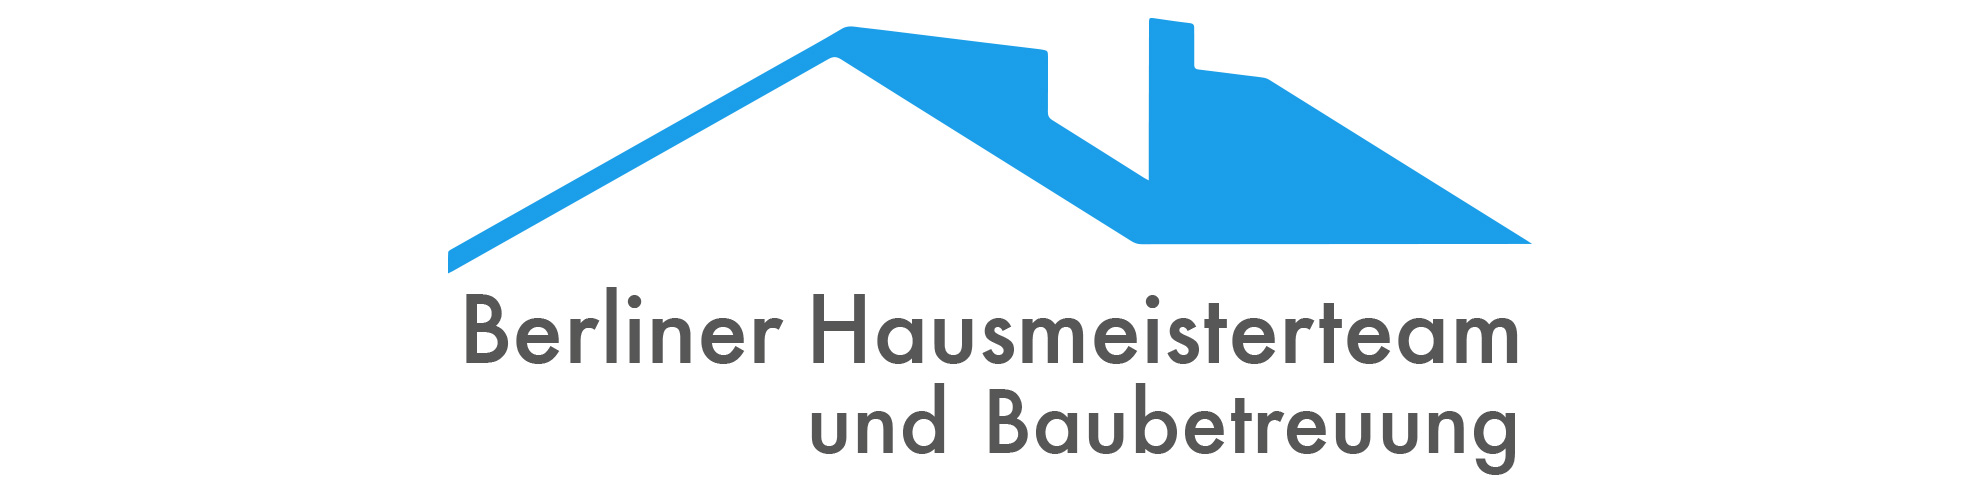 Berliner Hausmeisterservice